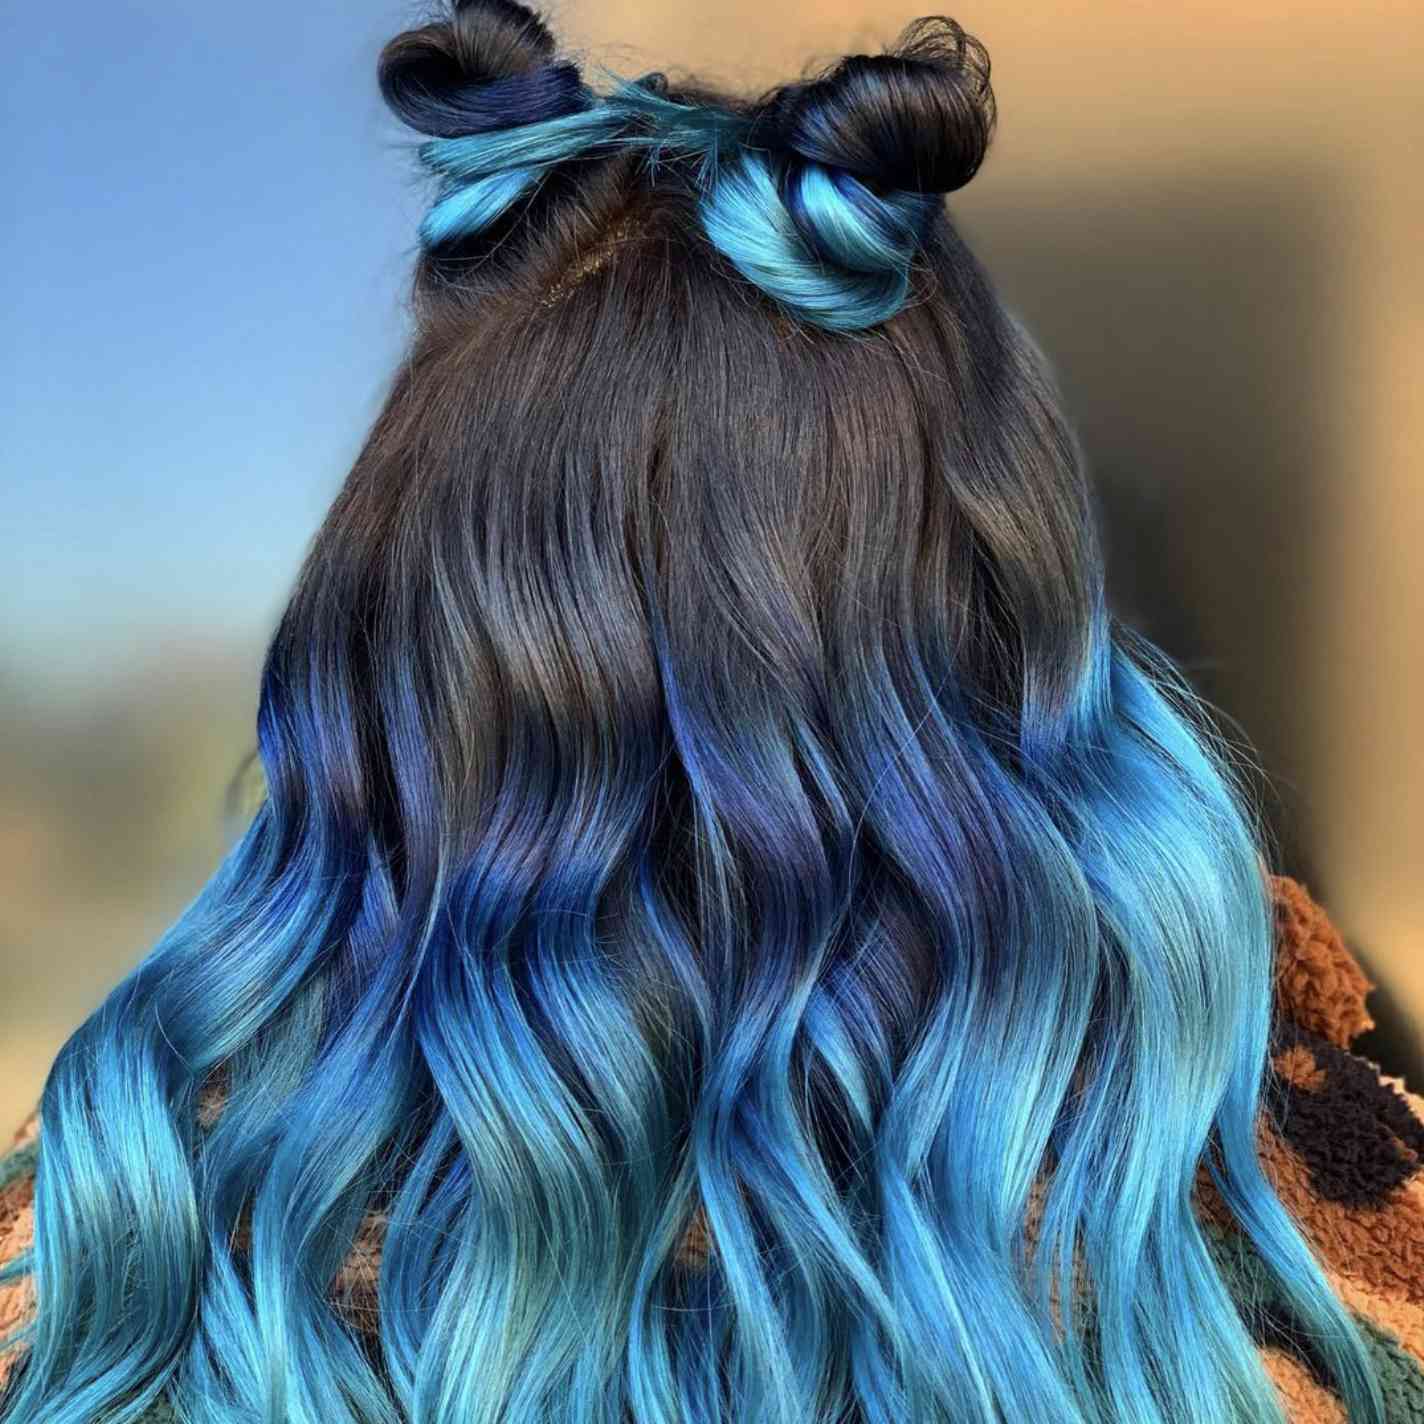 Two Tones Of Blue(blue black hair dye)